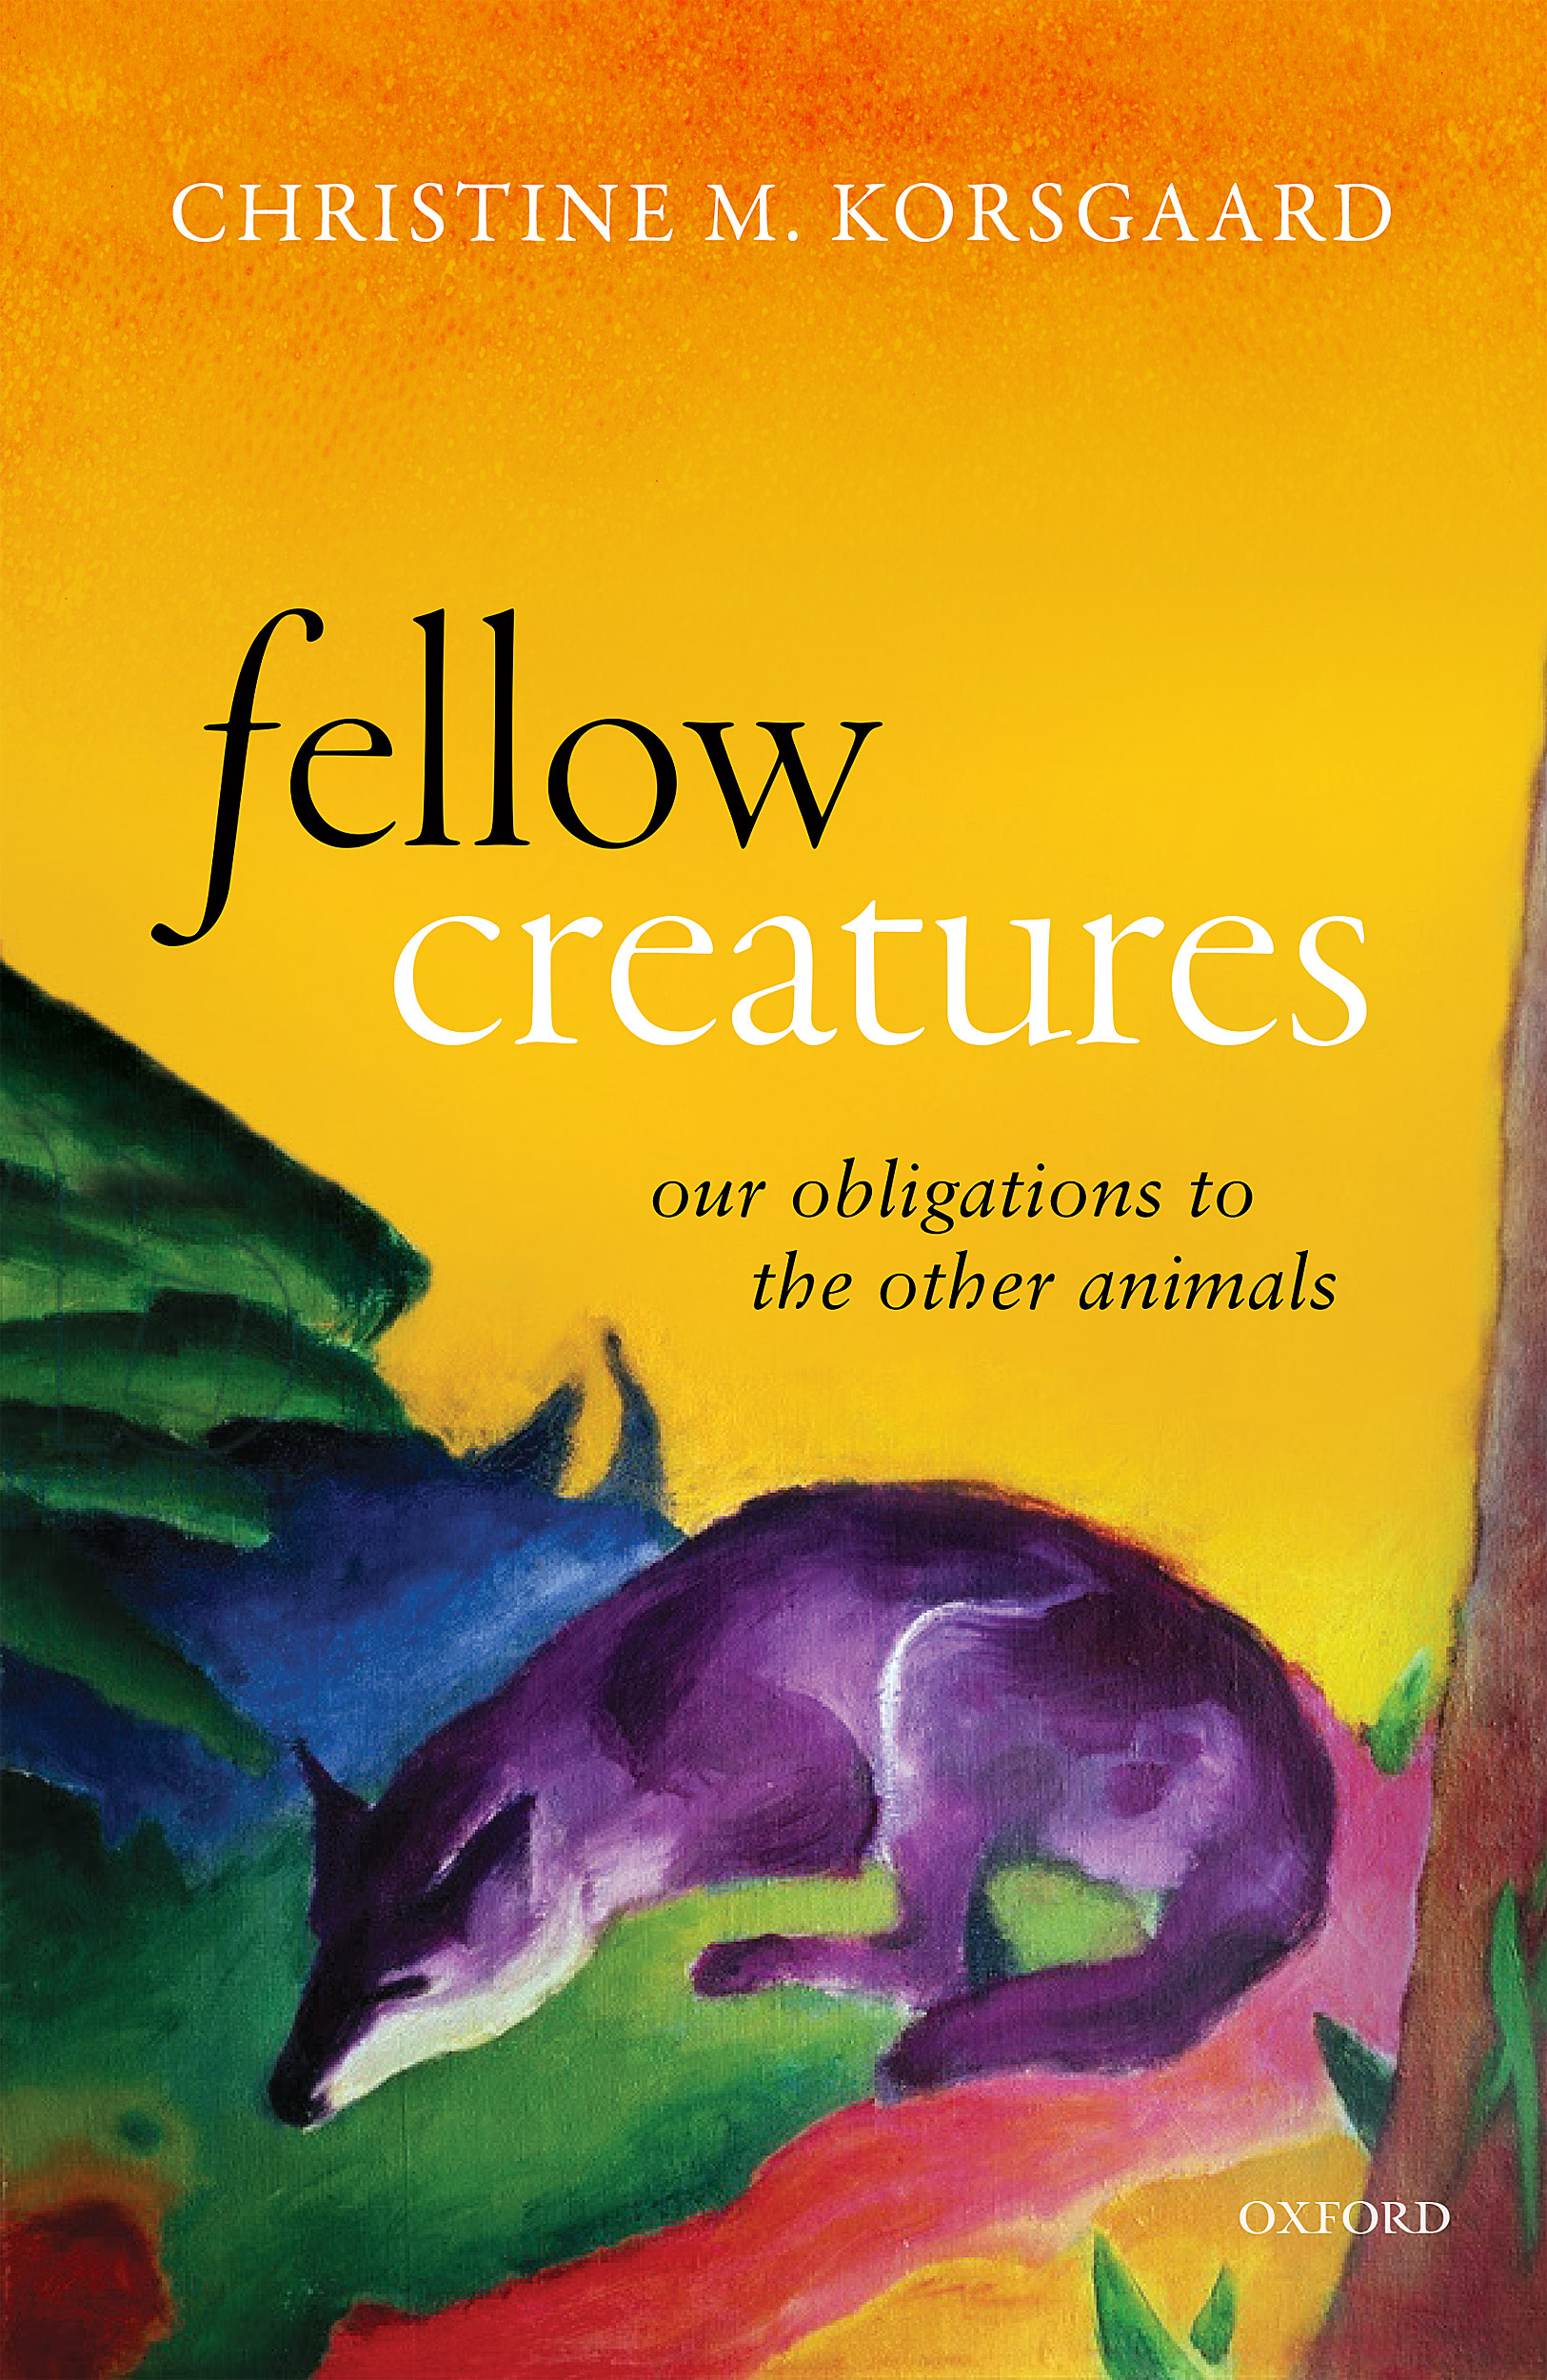 "Fellow Creatures" book cover.